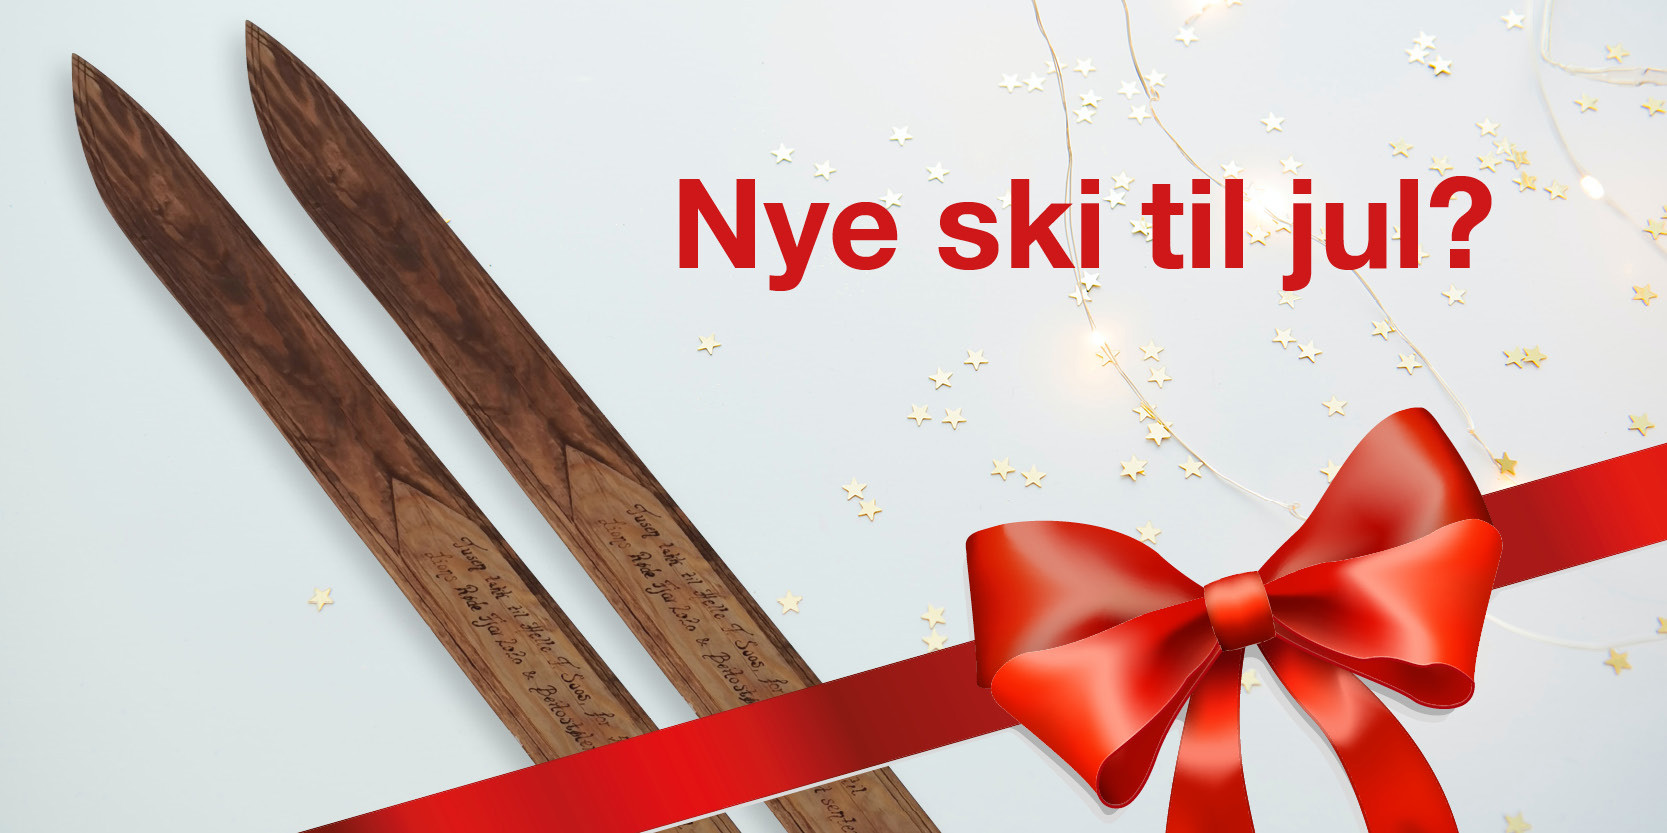 Nye ski til jul?